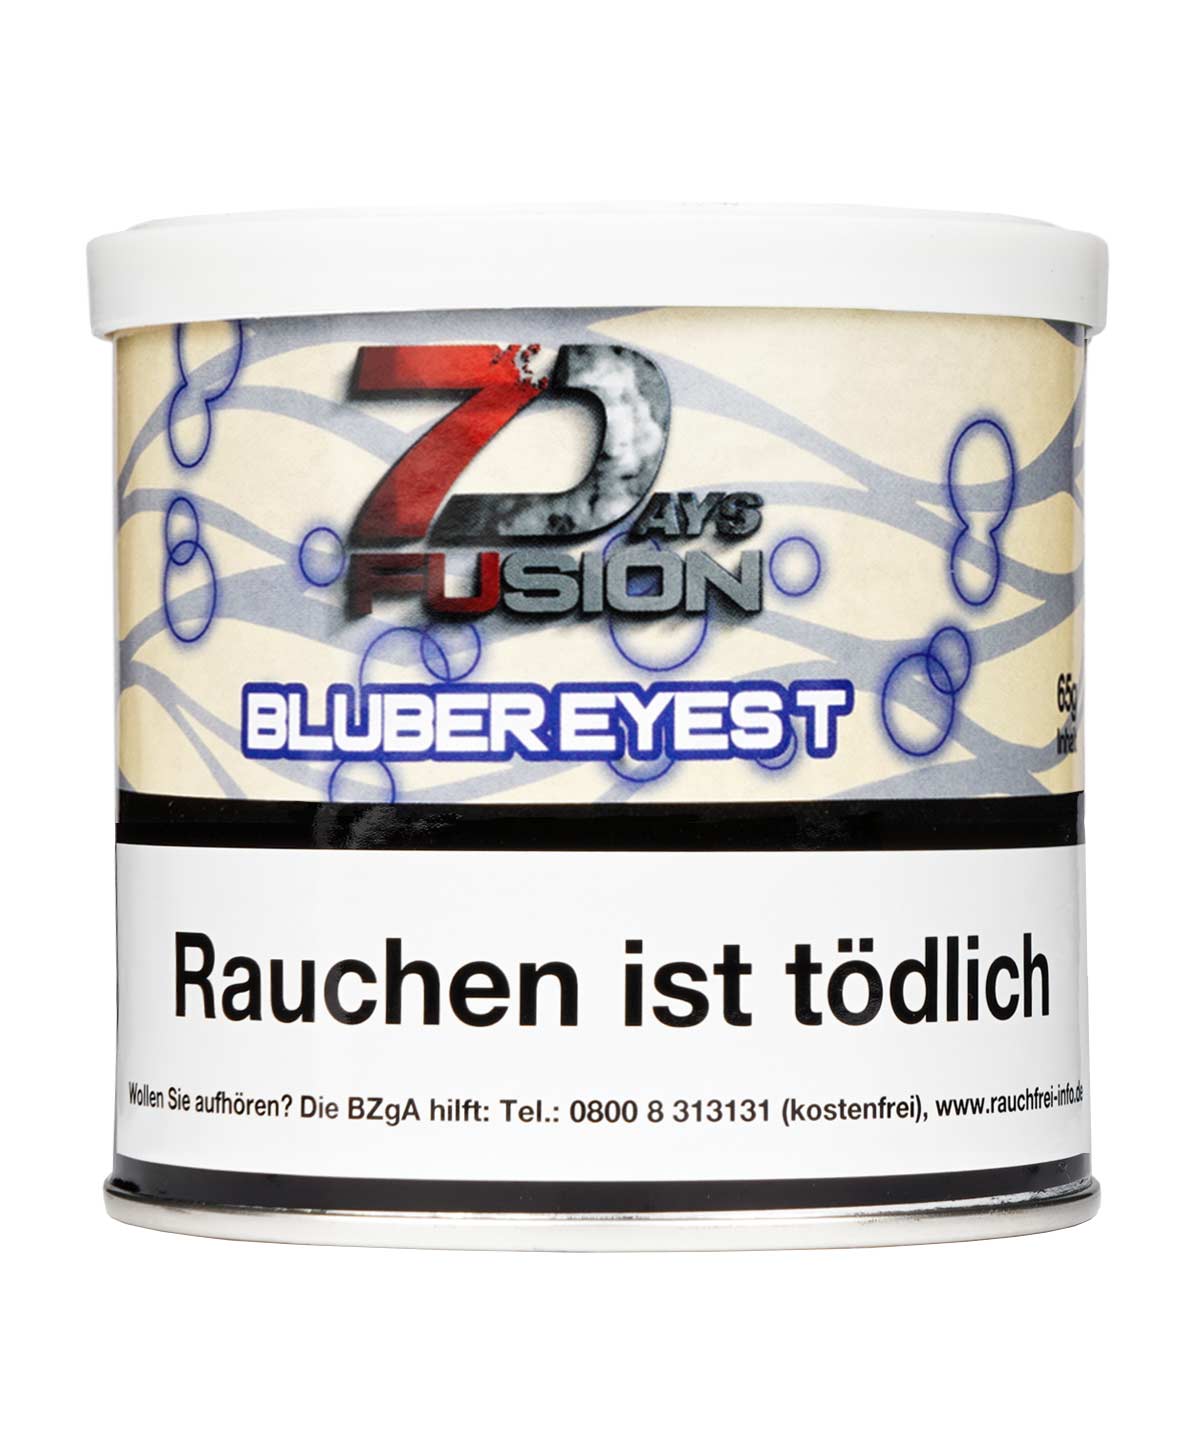 7 Days Fusion Pfeifentabak Bluber Eyes T 65g